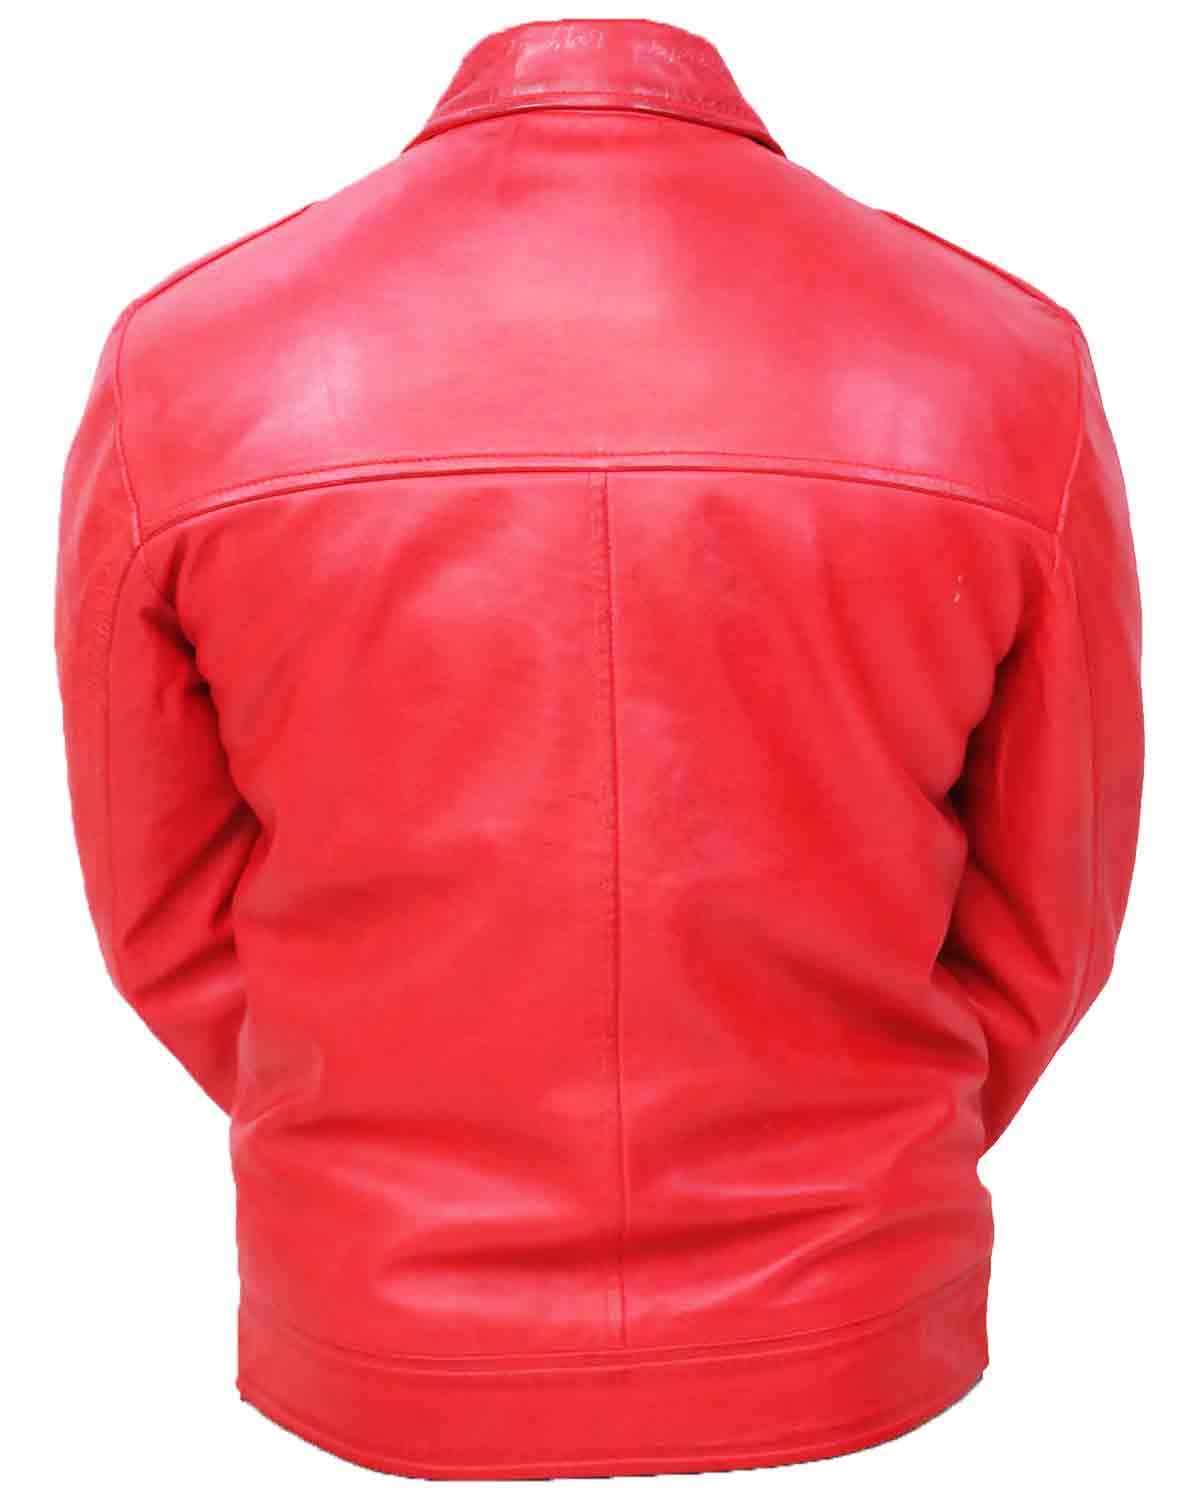 MotorCycleJackets Men's Vintage Distressed Red Leather Jacket